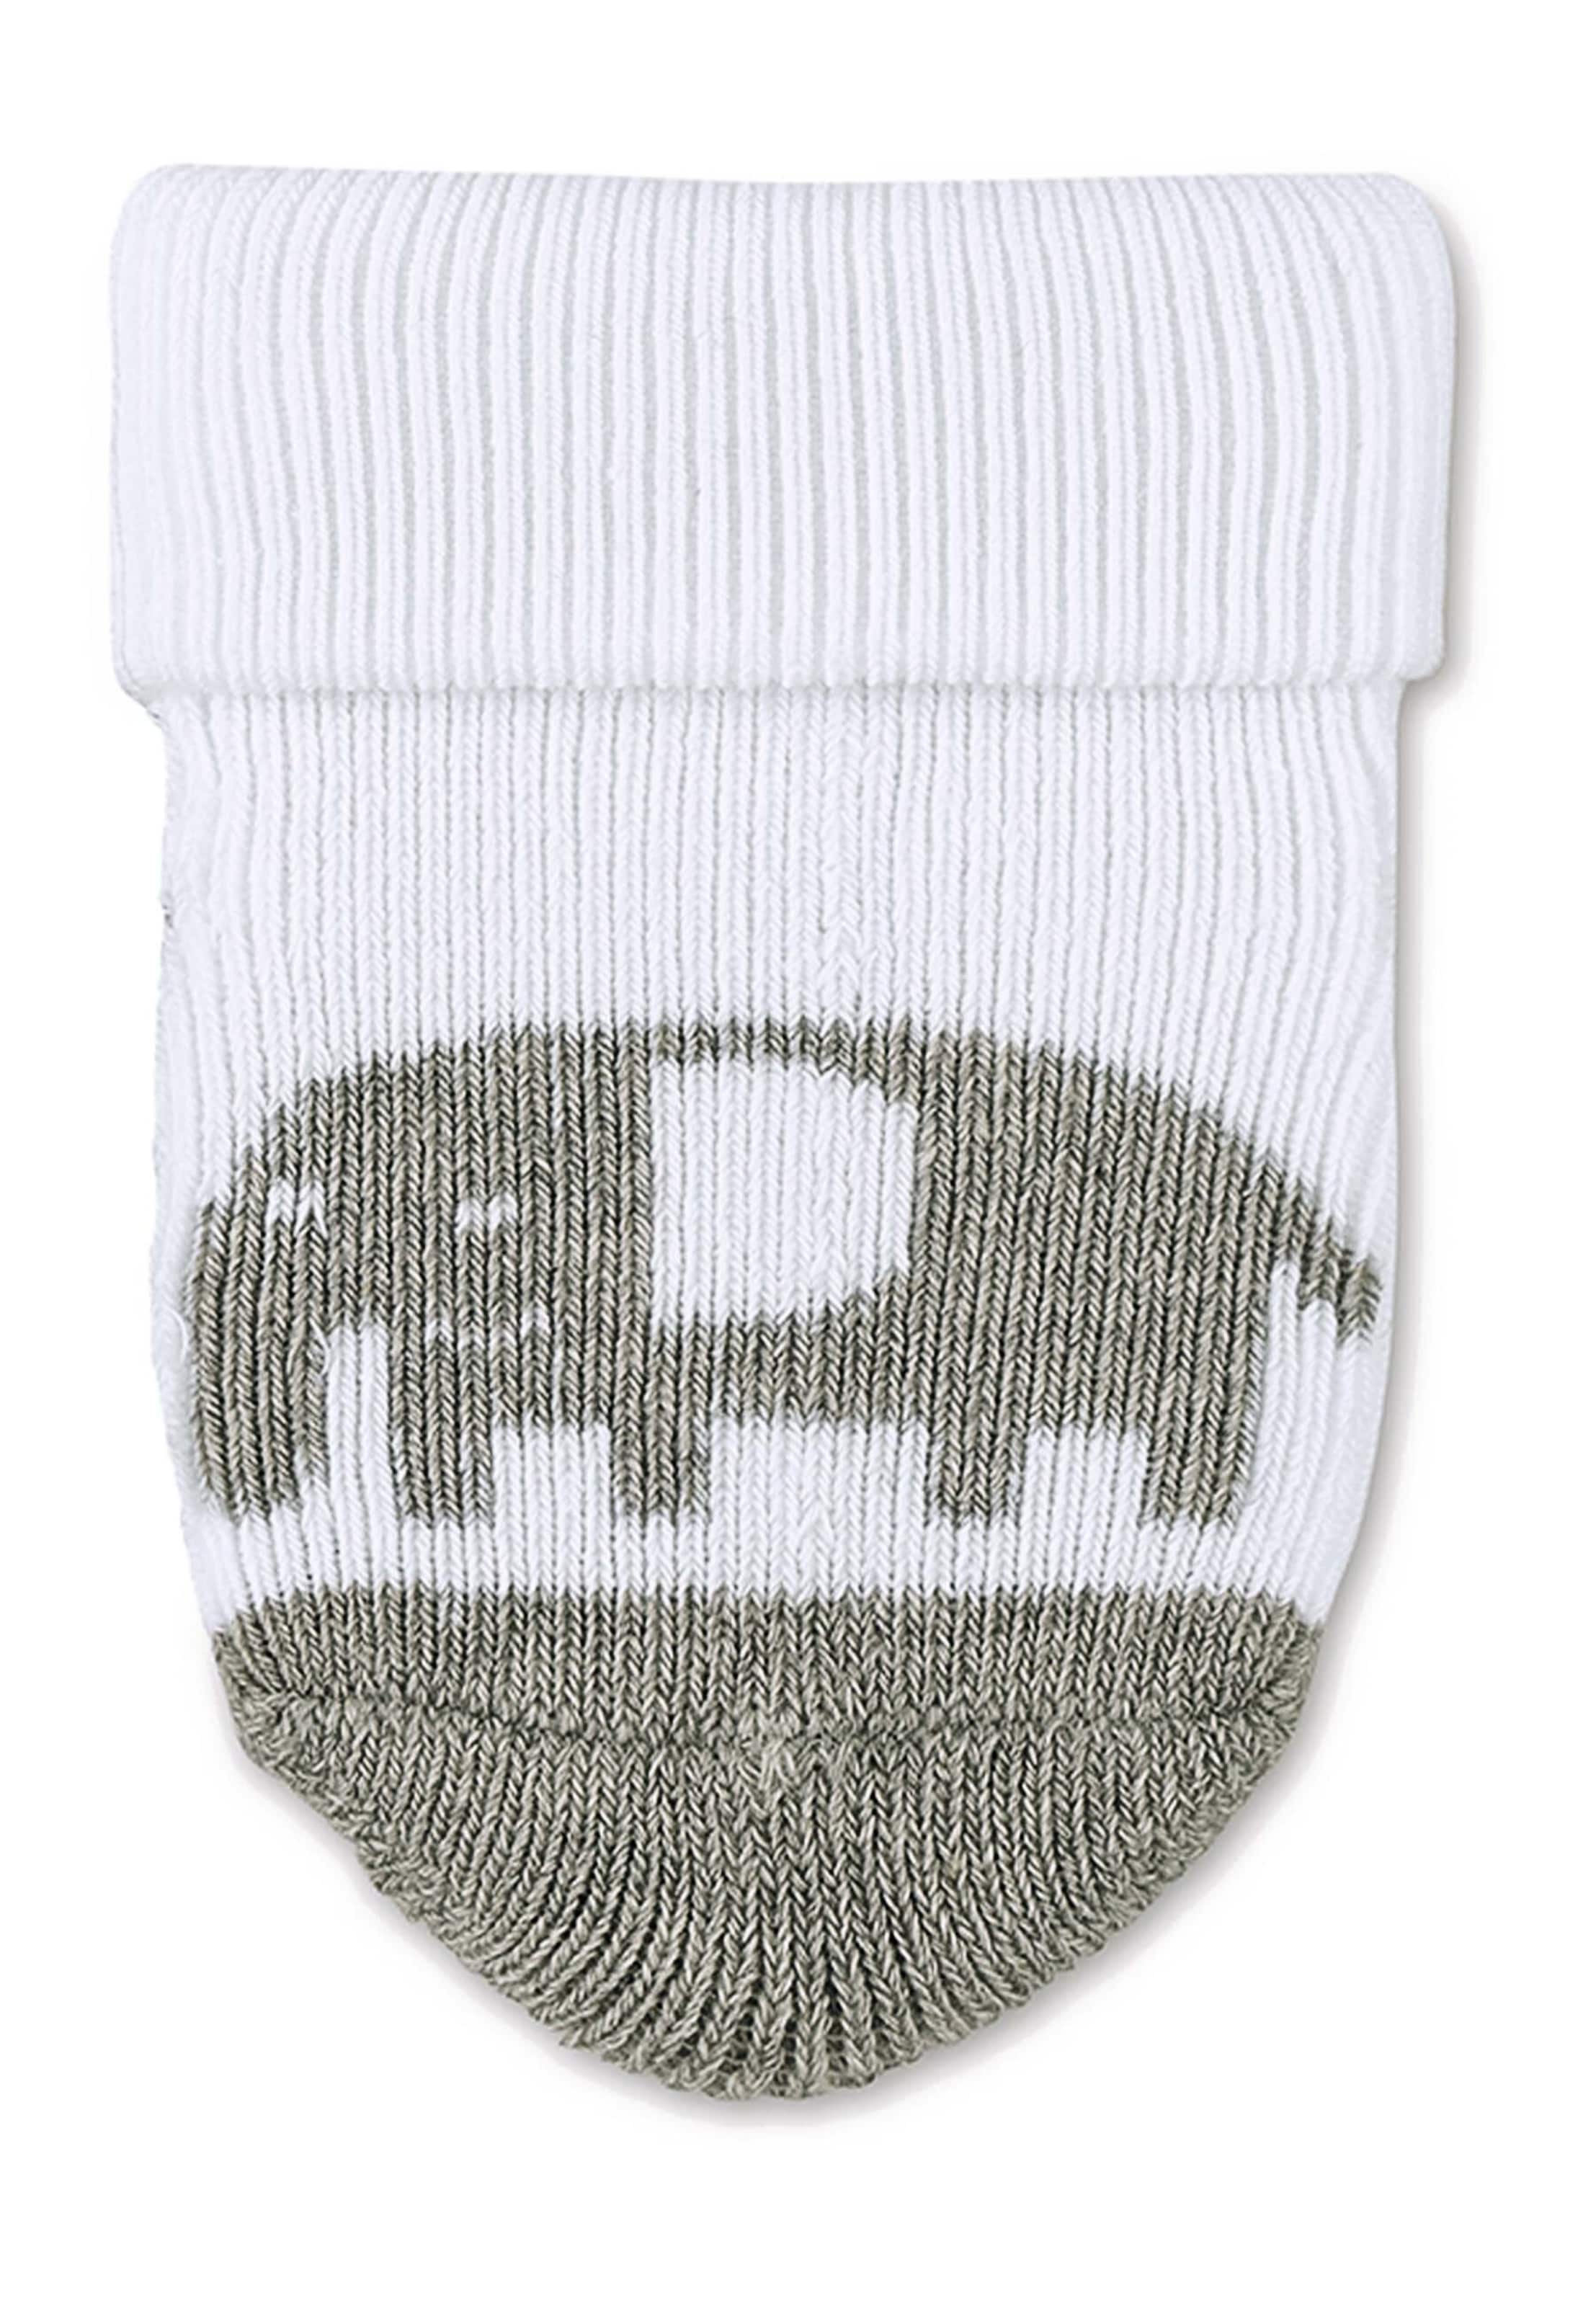 Kinder Teens (Gr. 140-176) STERNTALER Socken 'Elefant' in Hellgrau, Weiß - SS16257